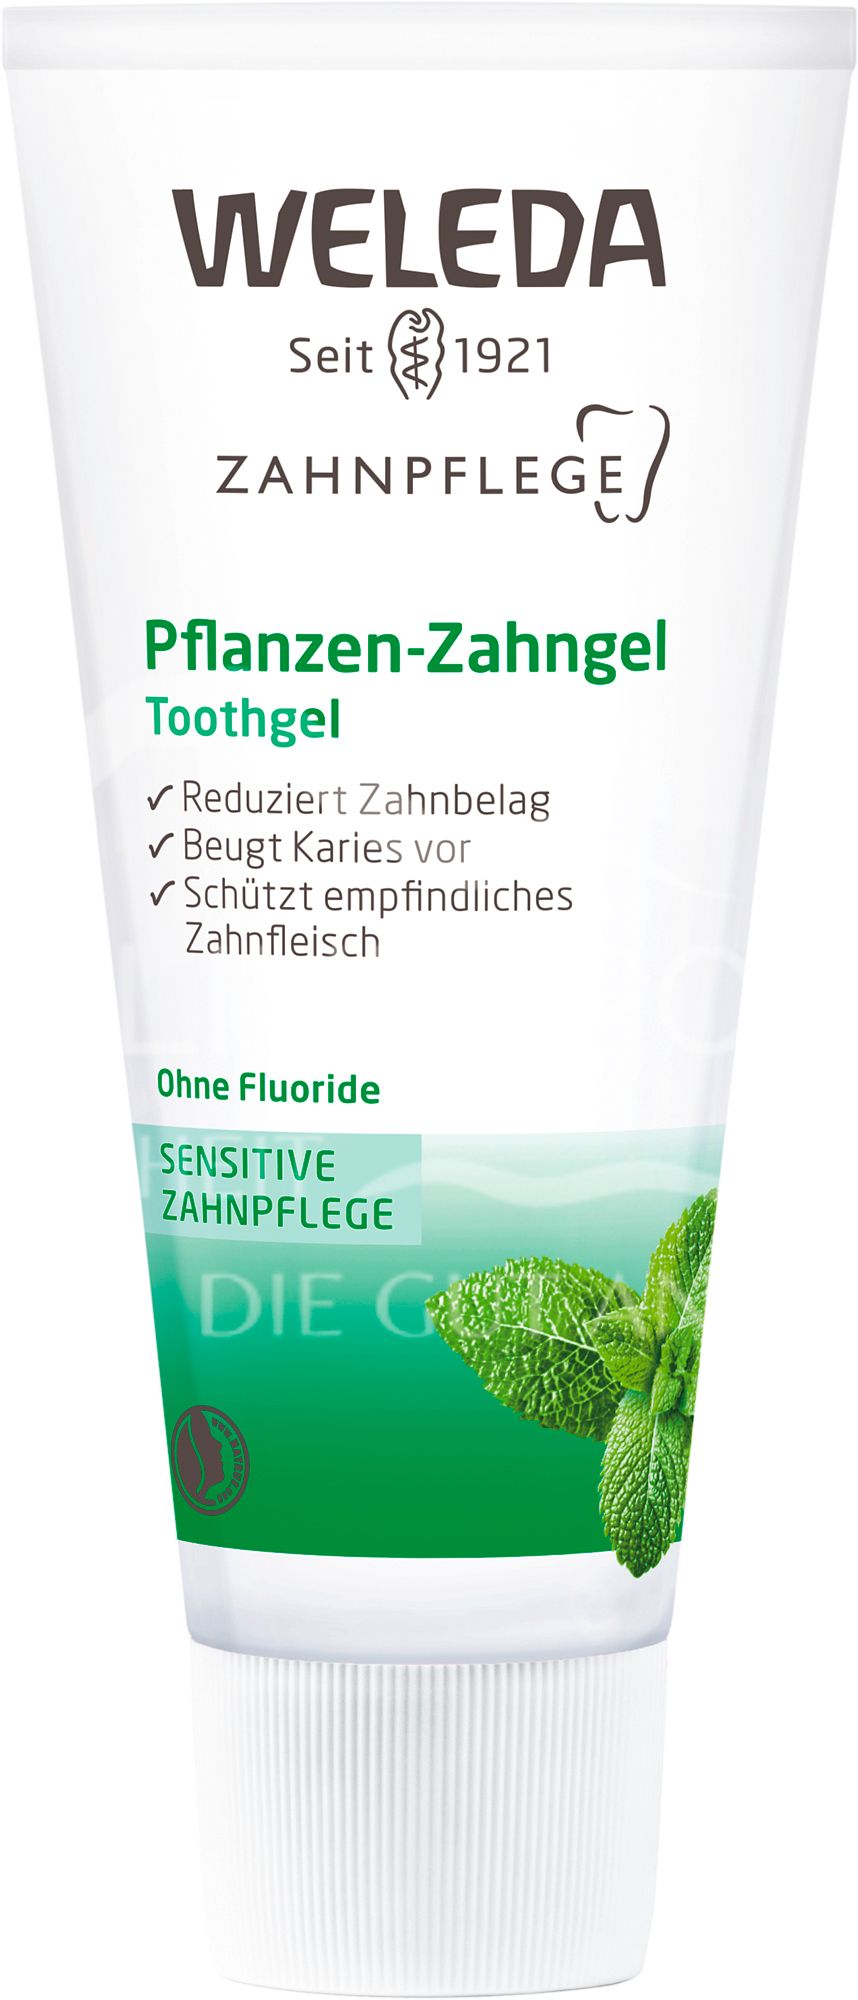 Weleda Pflanzen-Zahngel